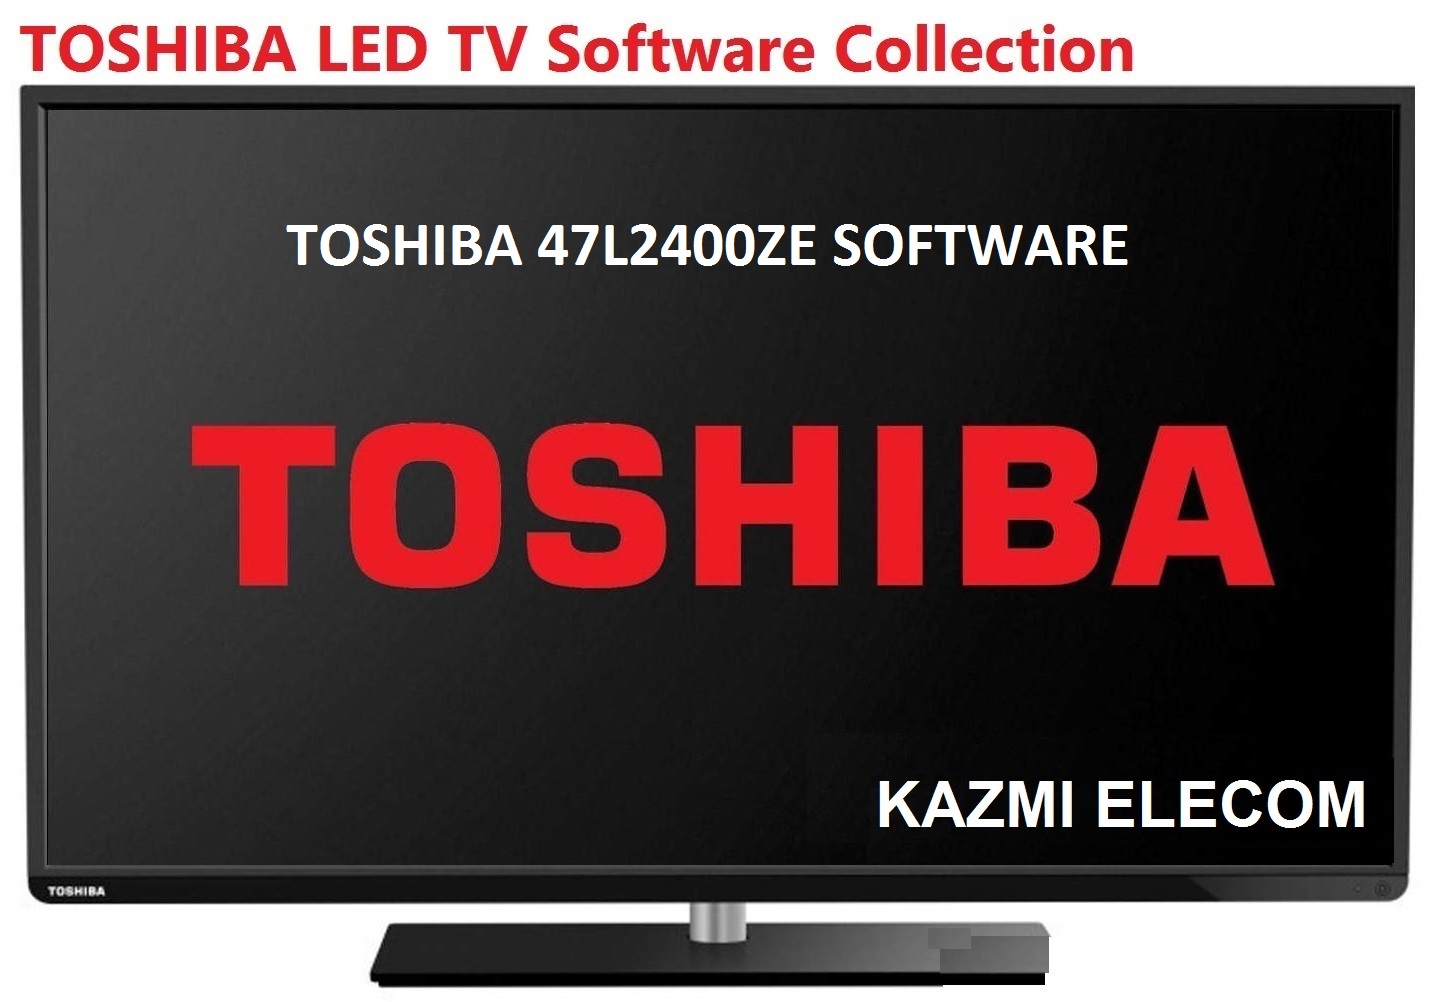 Toshiba 47L2400Ze